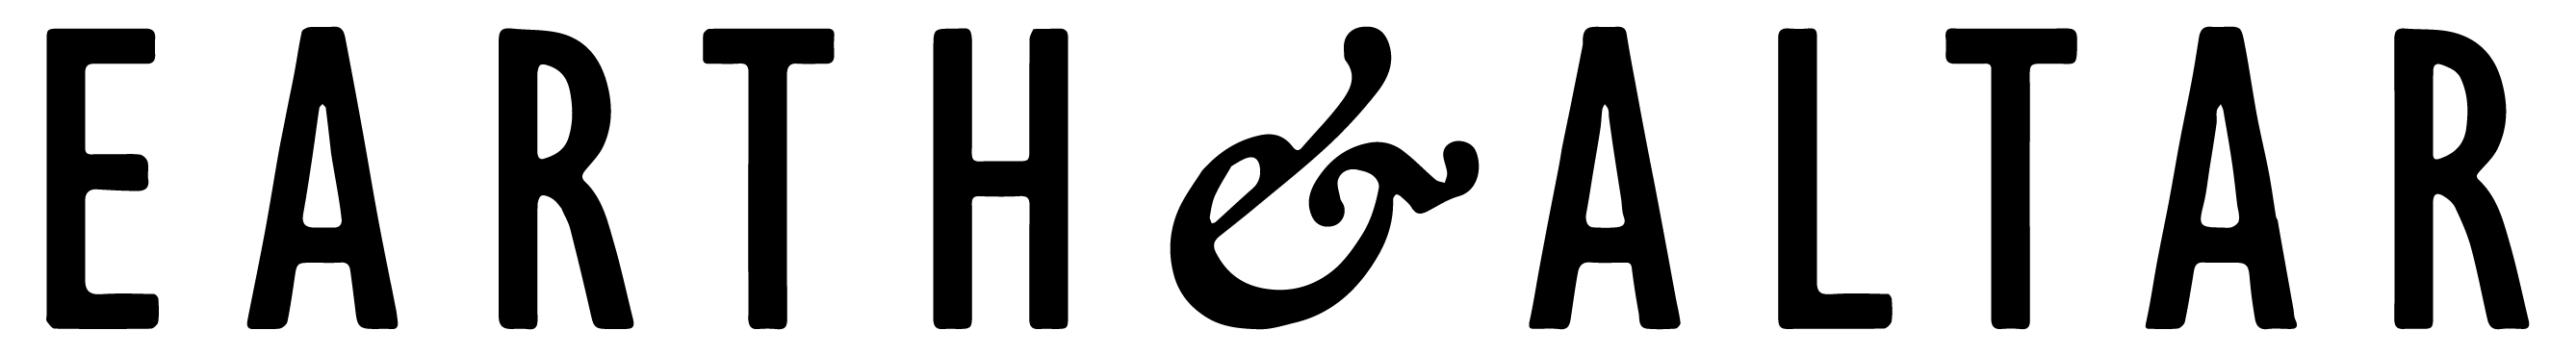 Earth & Altar logo